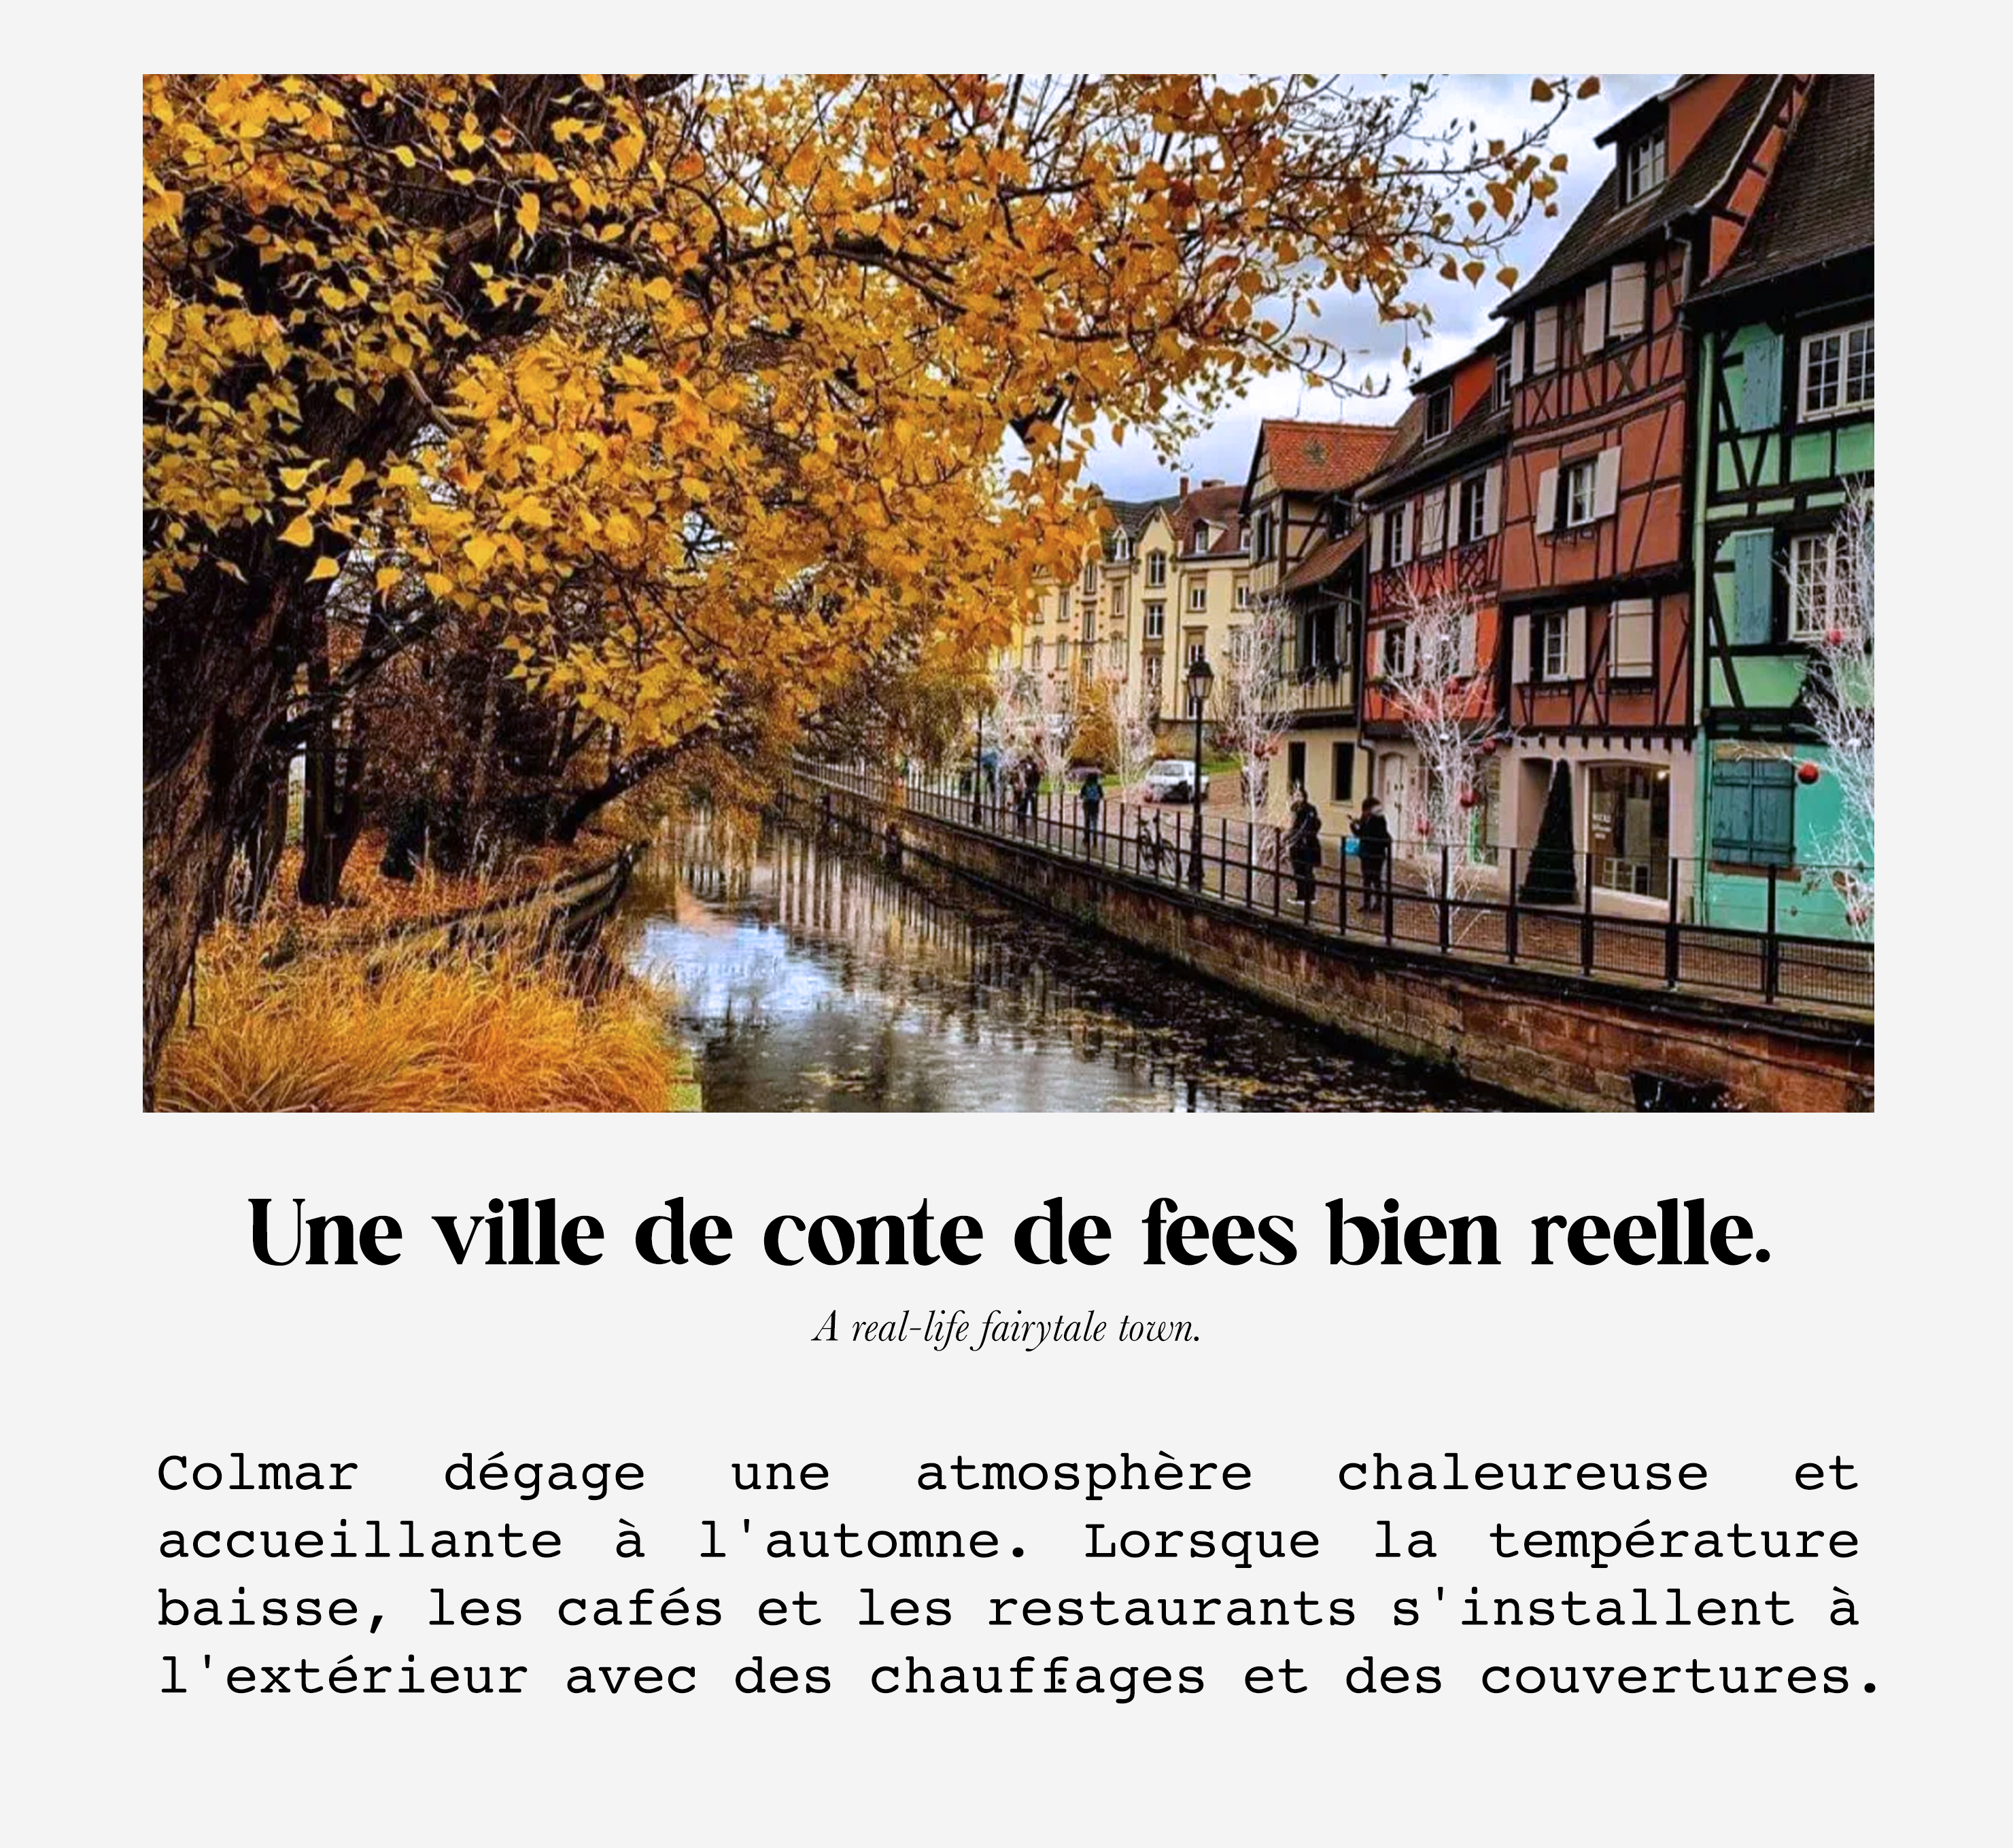 100 Lieux en France Scratch Off poster